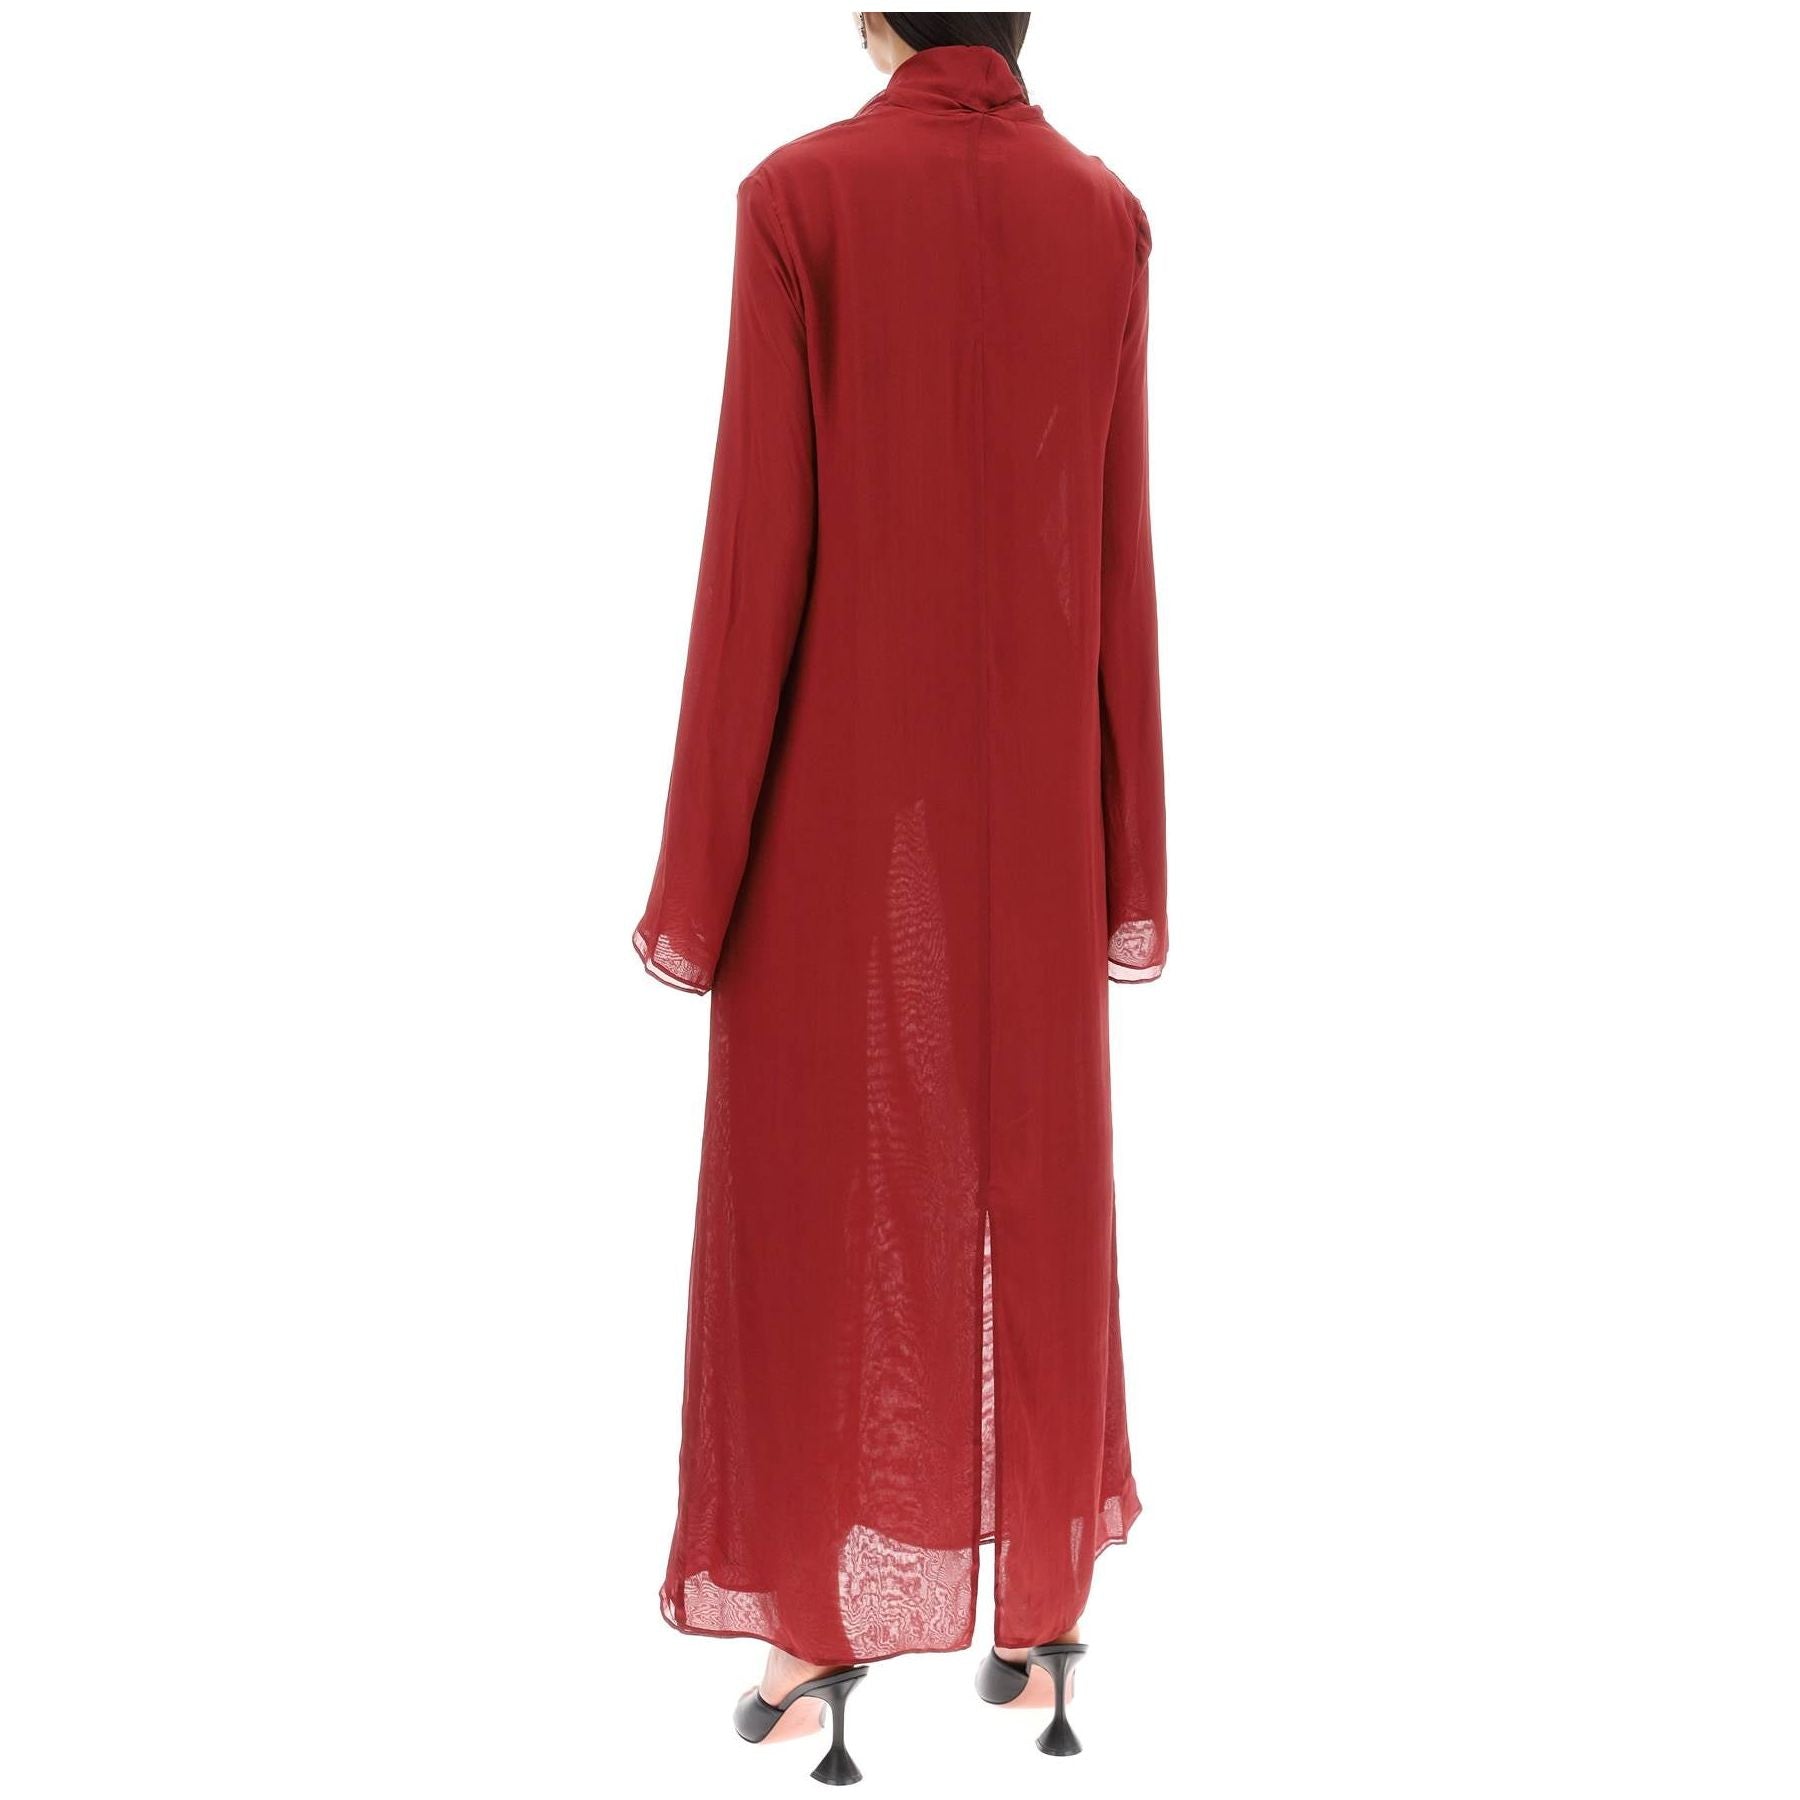 Desma Silk Chiffon Dress